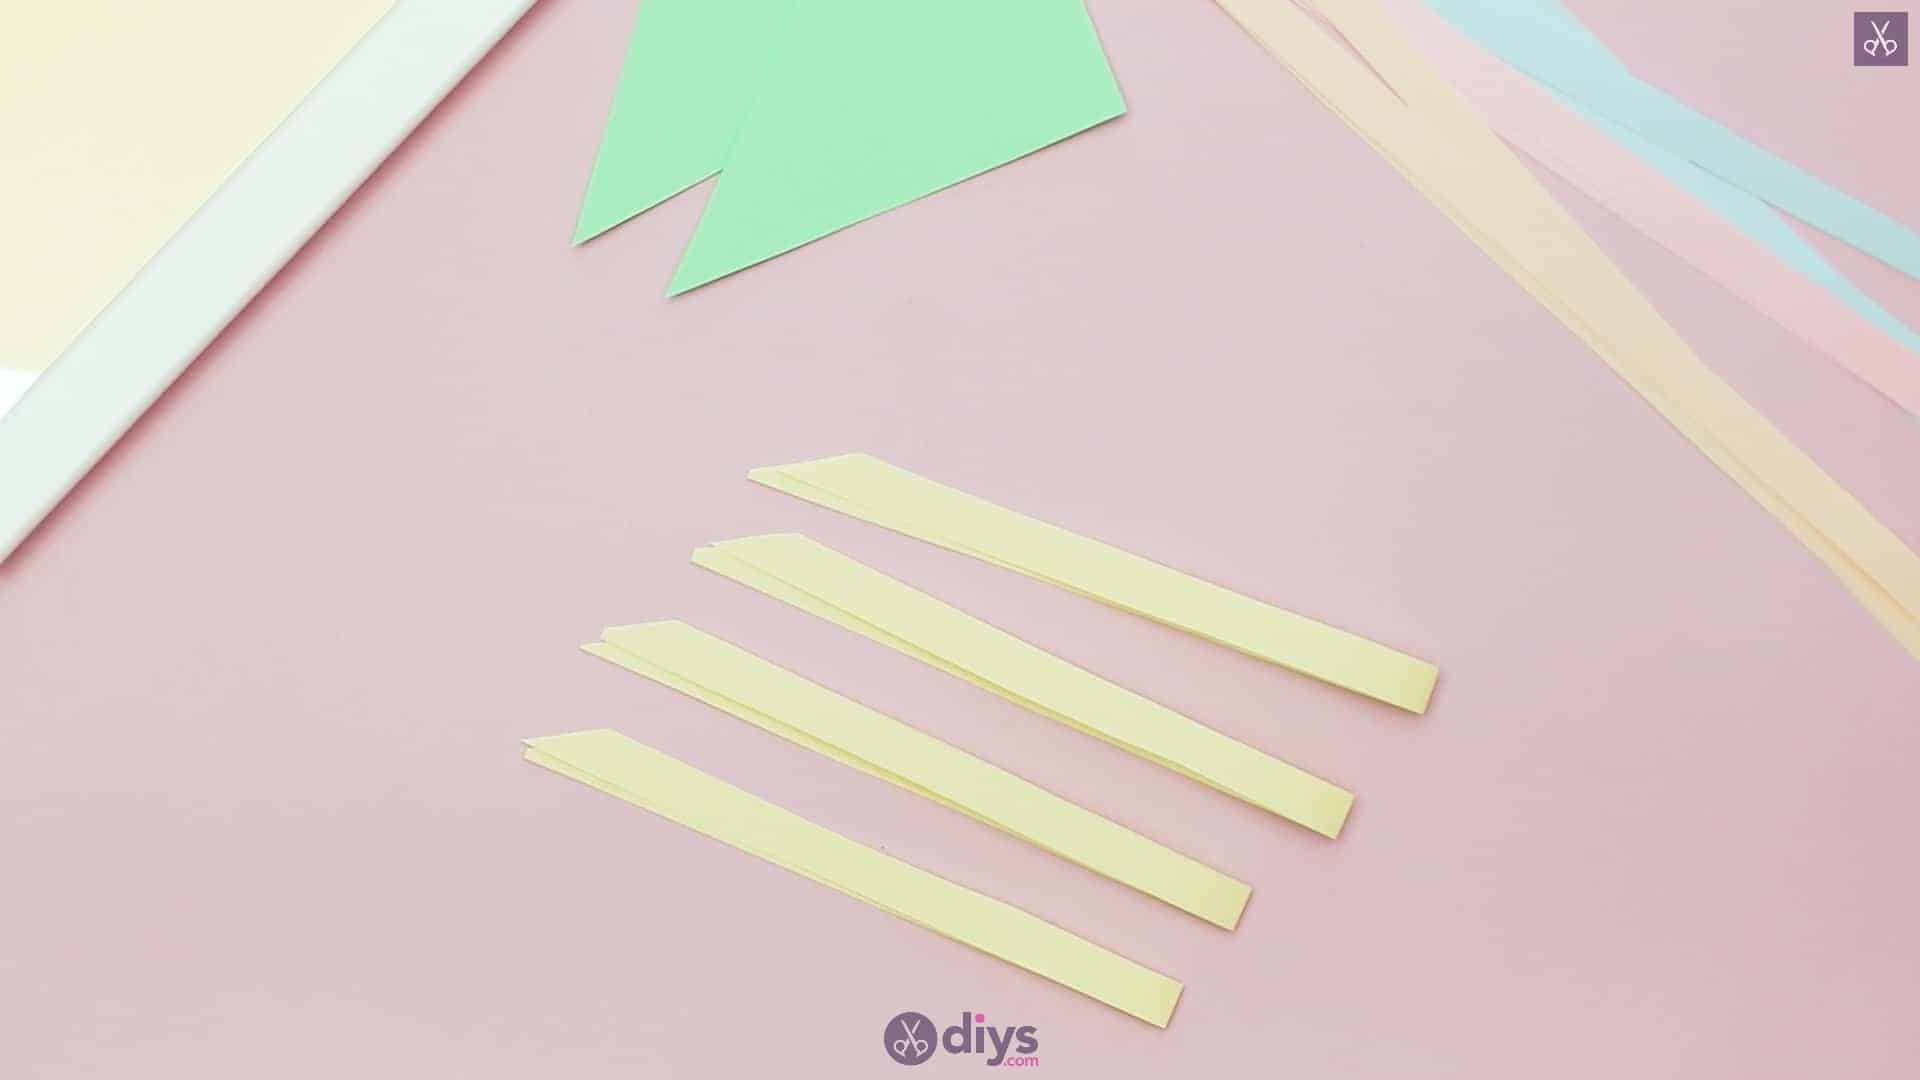 Diy origami flower art step 3